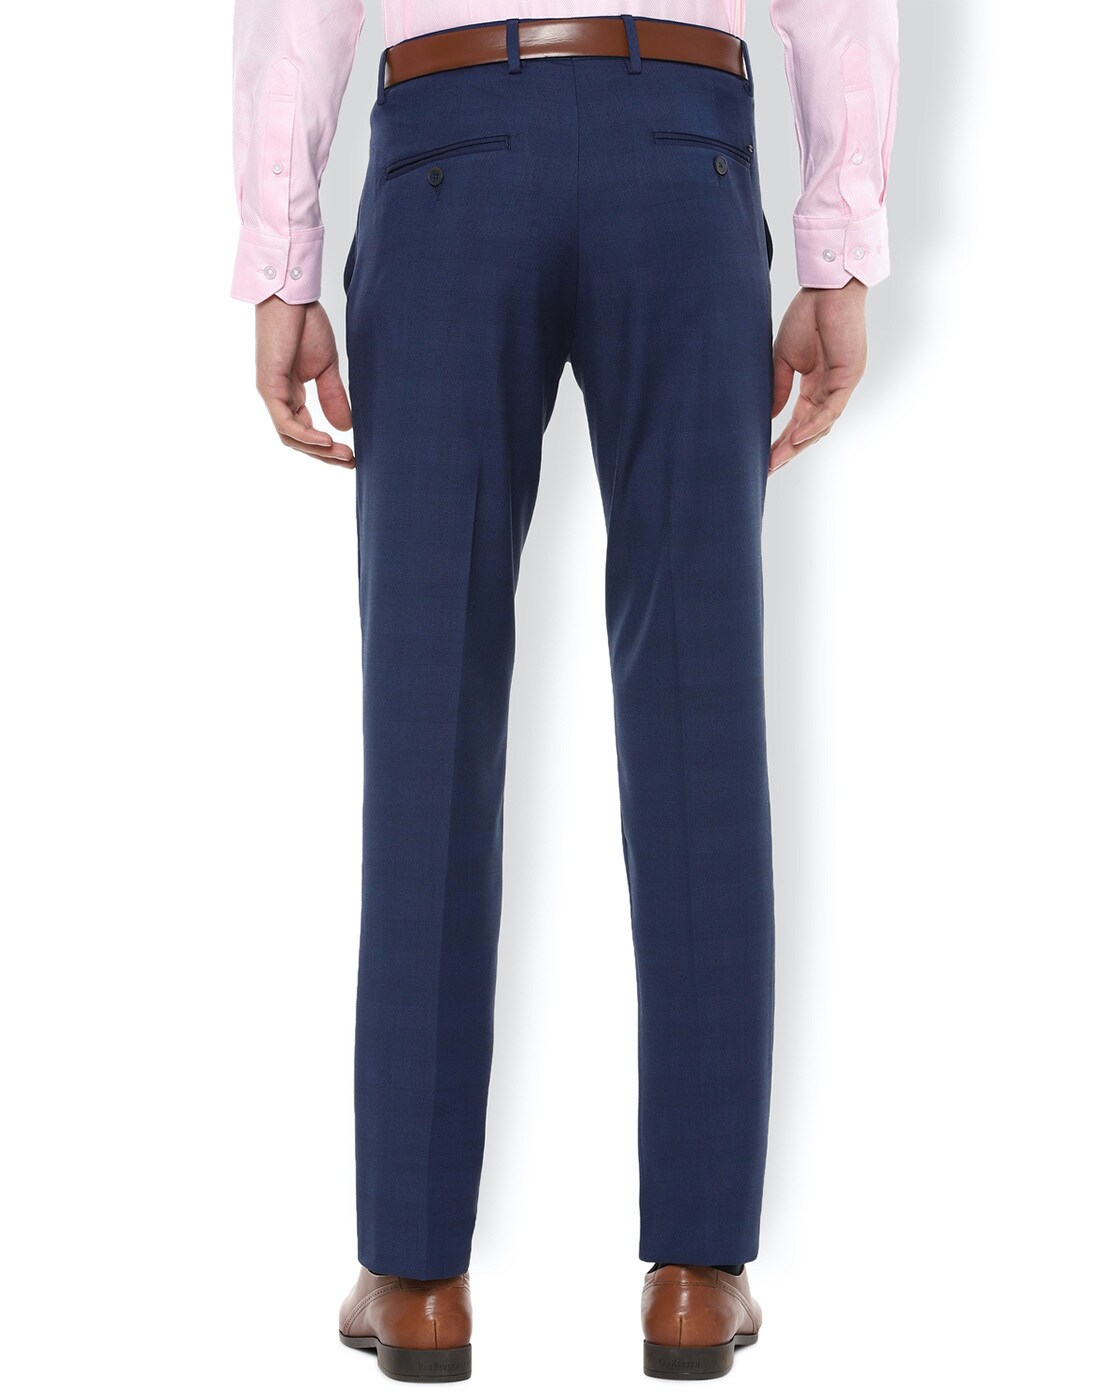 Jack & Jones Bright Blue Skinny Fit Suit Trousers | New Look